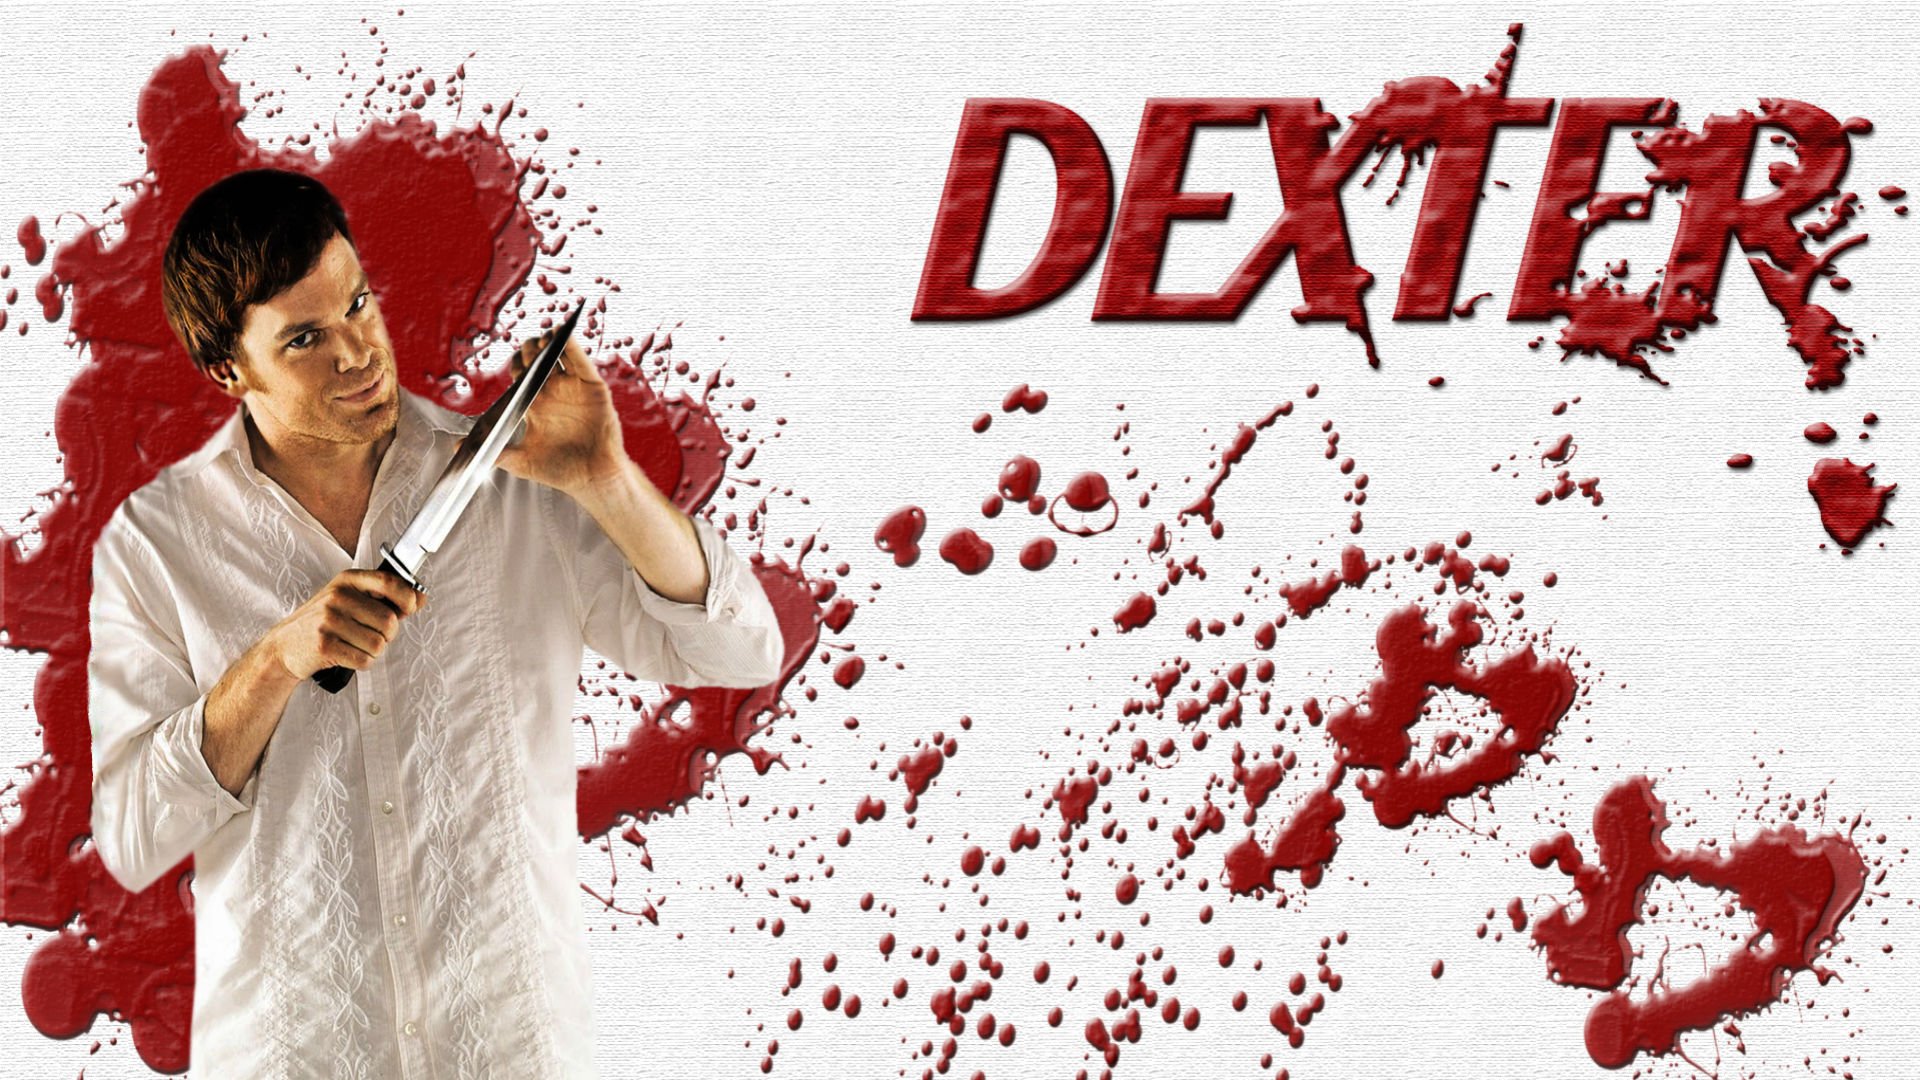 dexter s01e01 download free